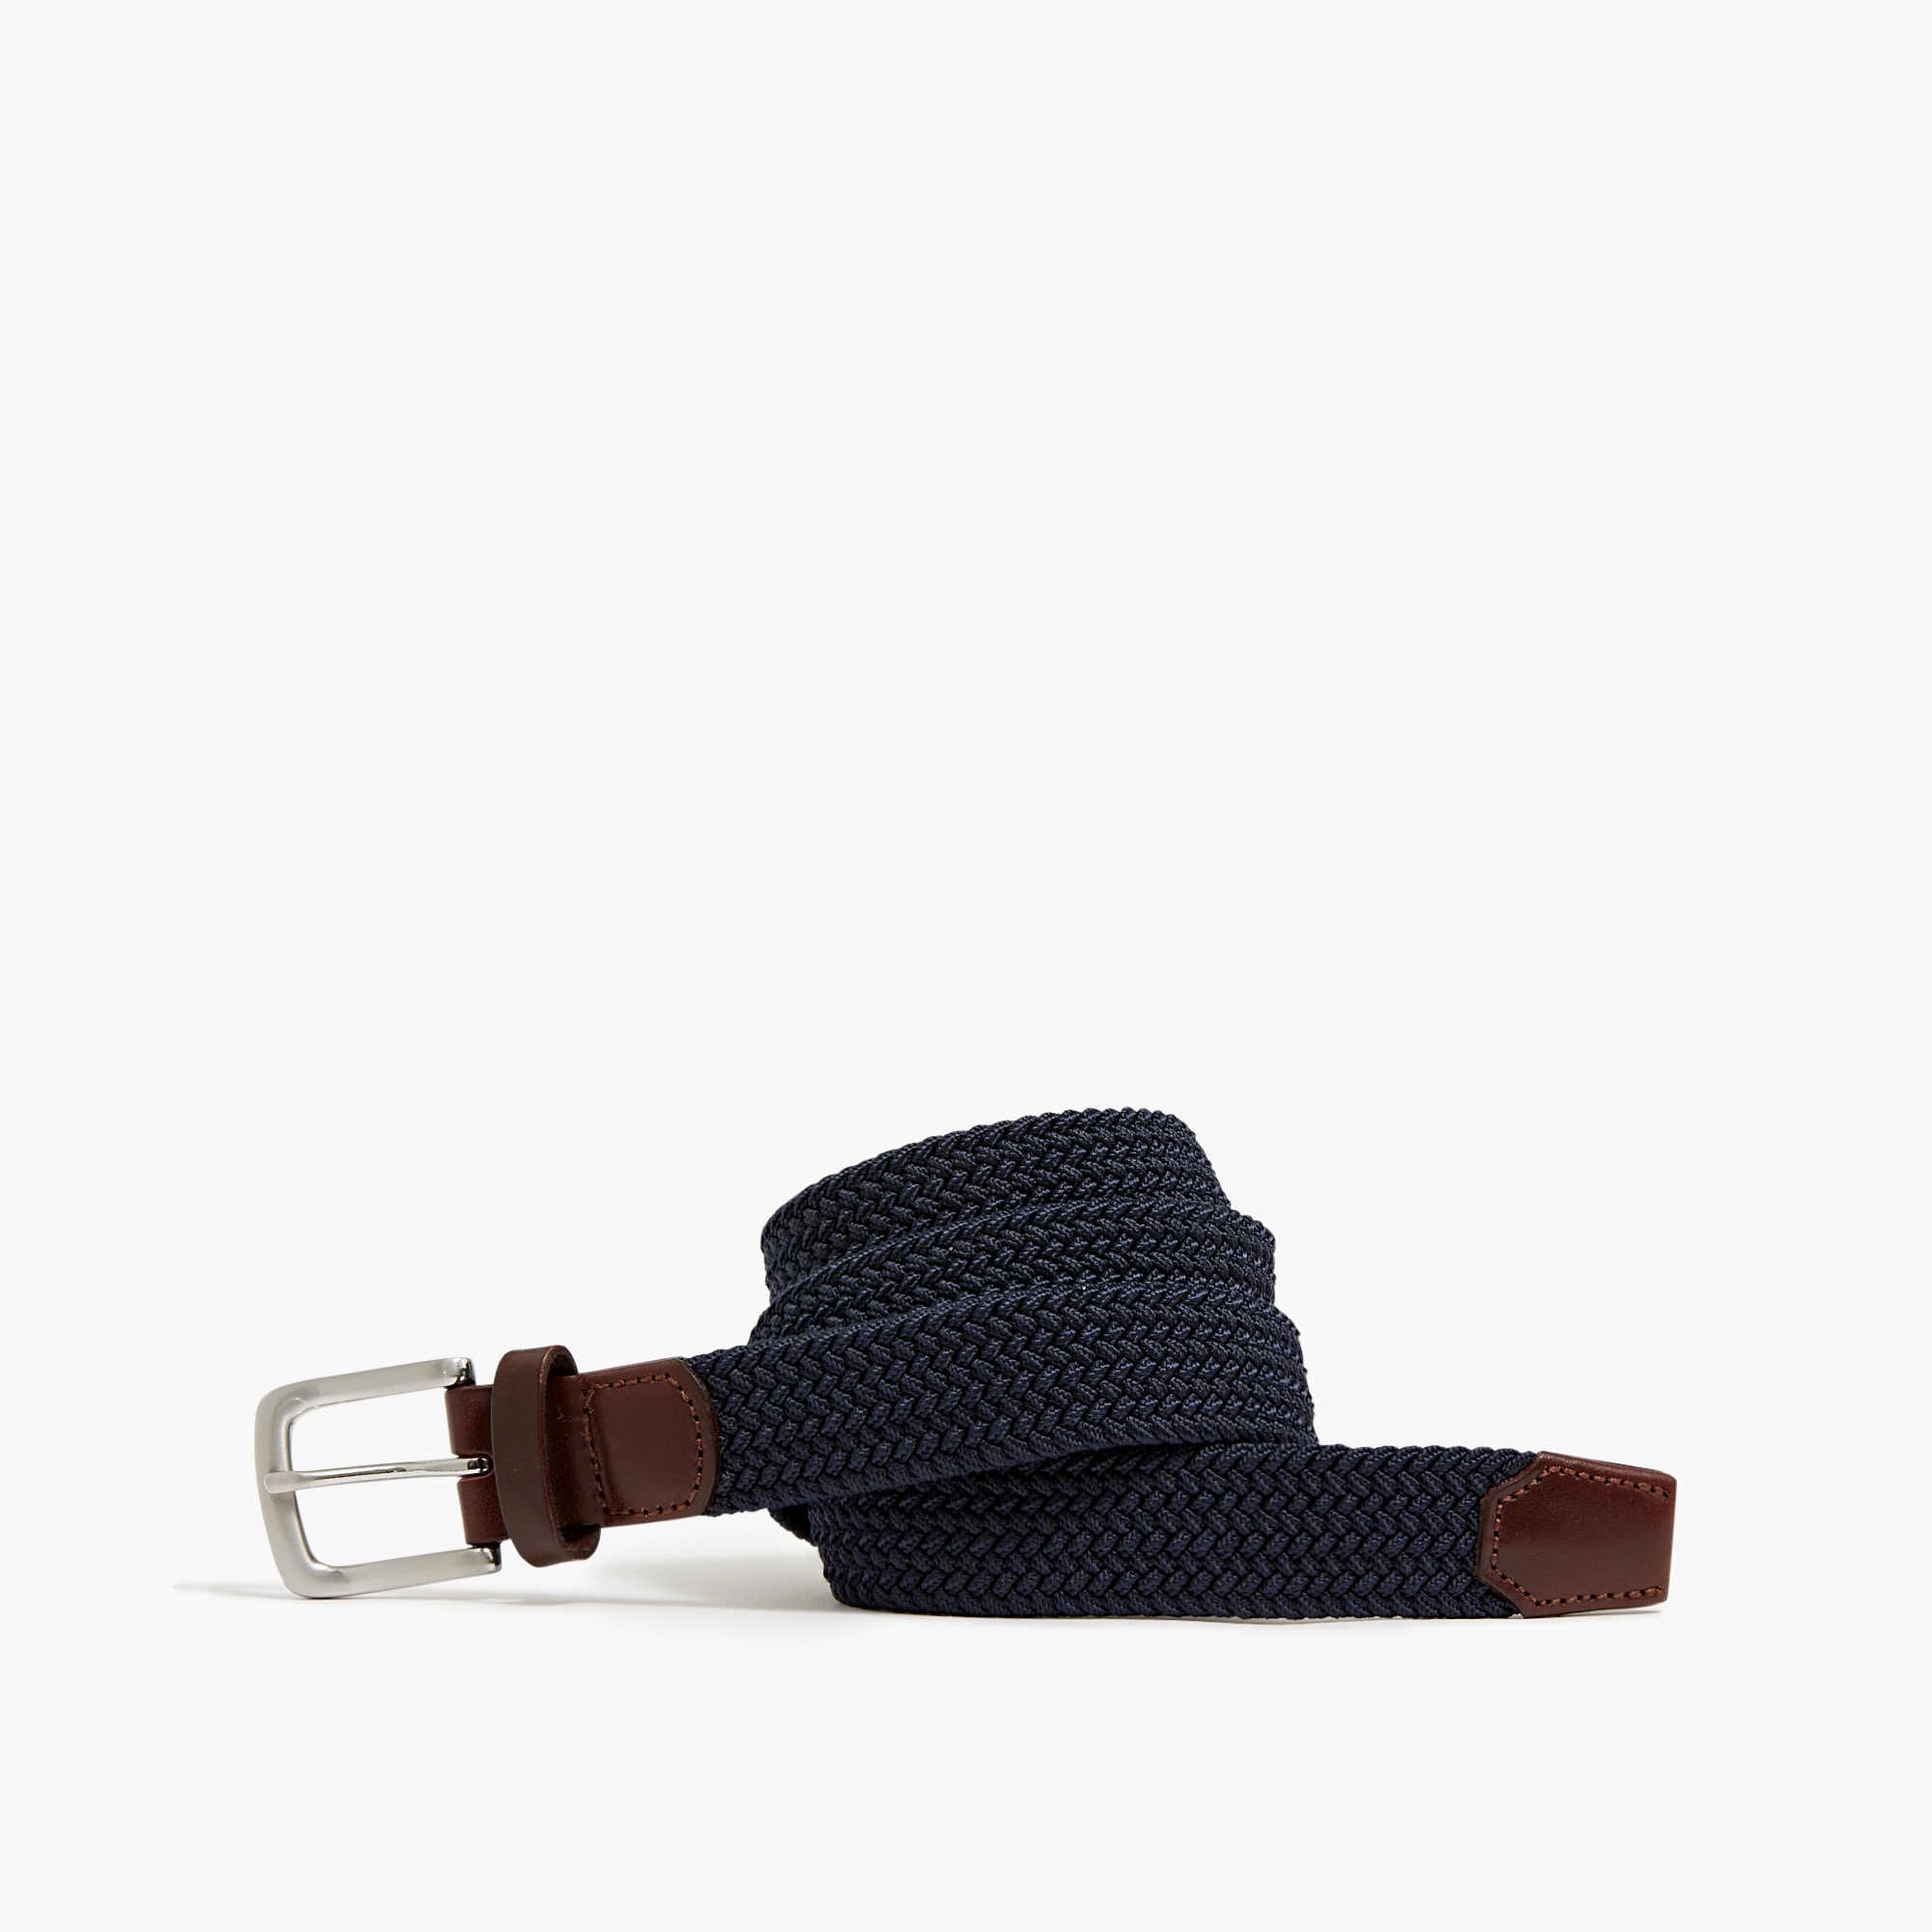 Jcrew Mixed-rope belt